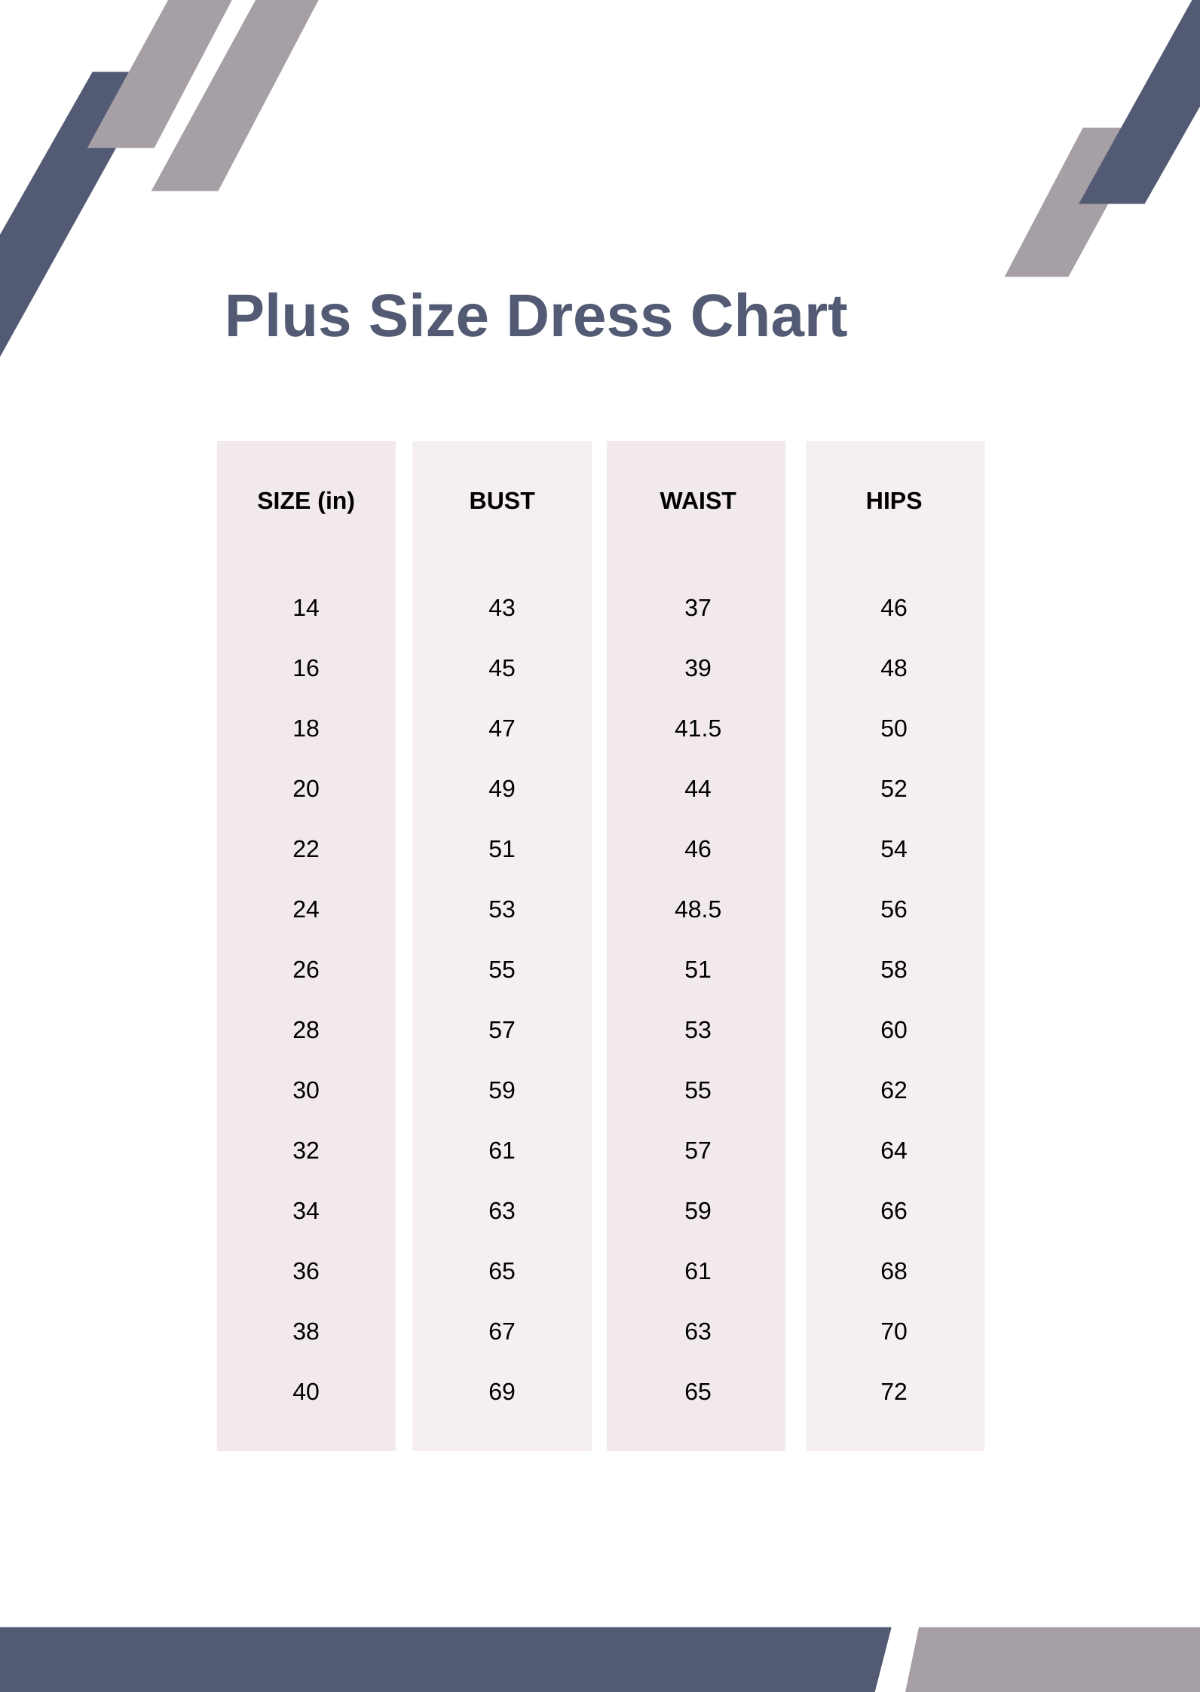 FREE Dress Size Chart - Edit Online & Download | Template.net